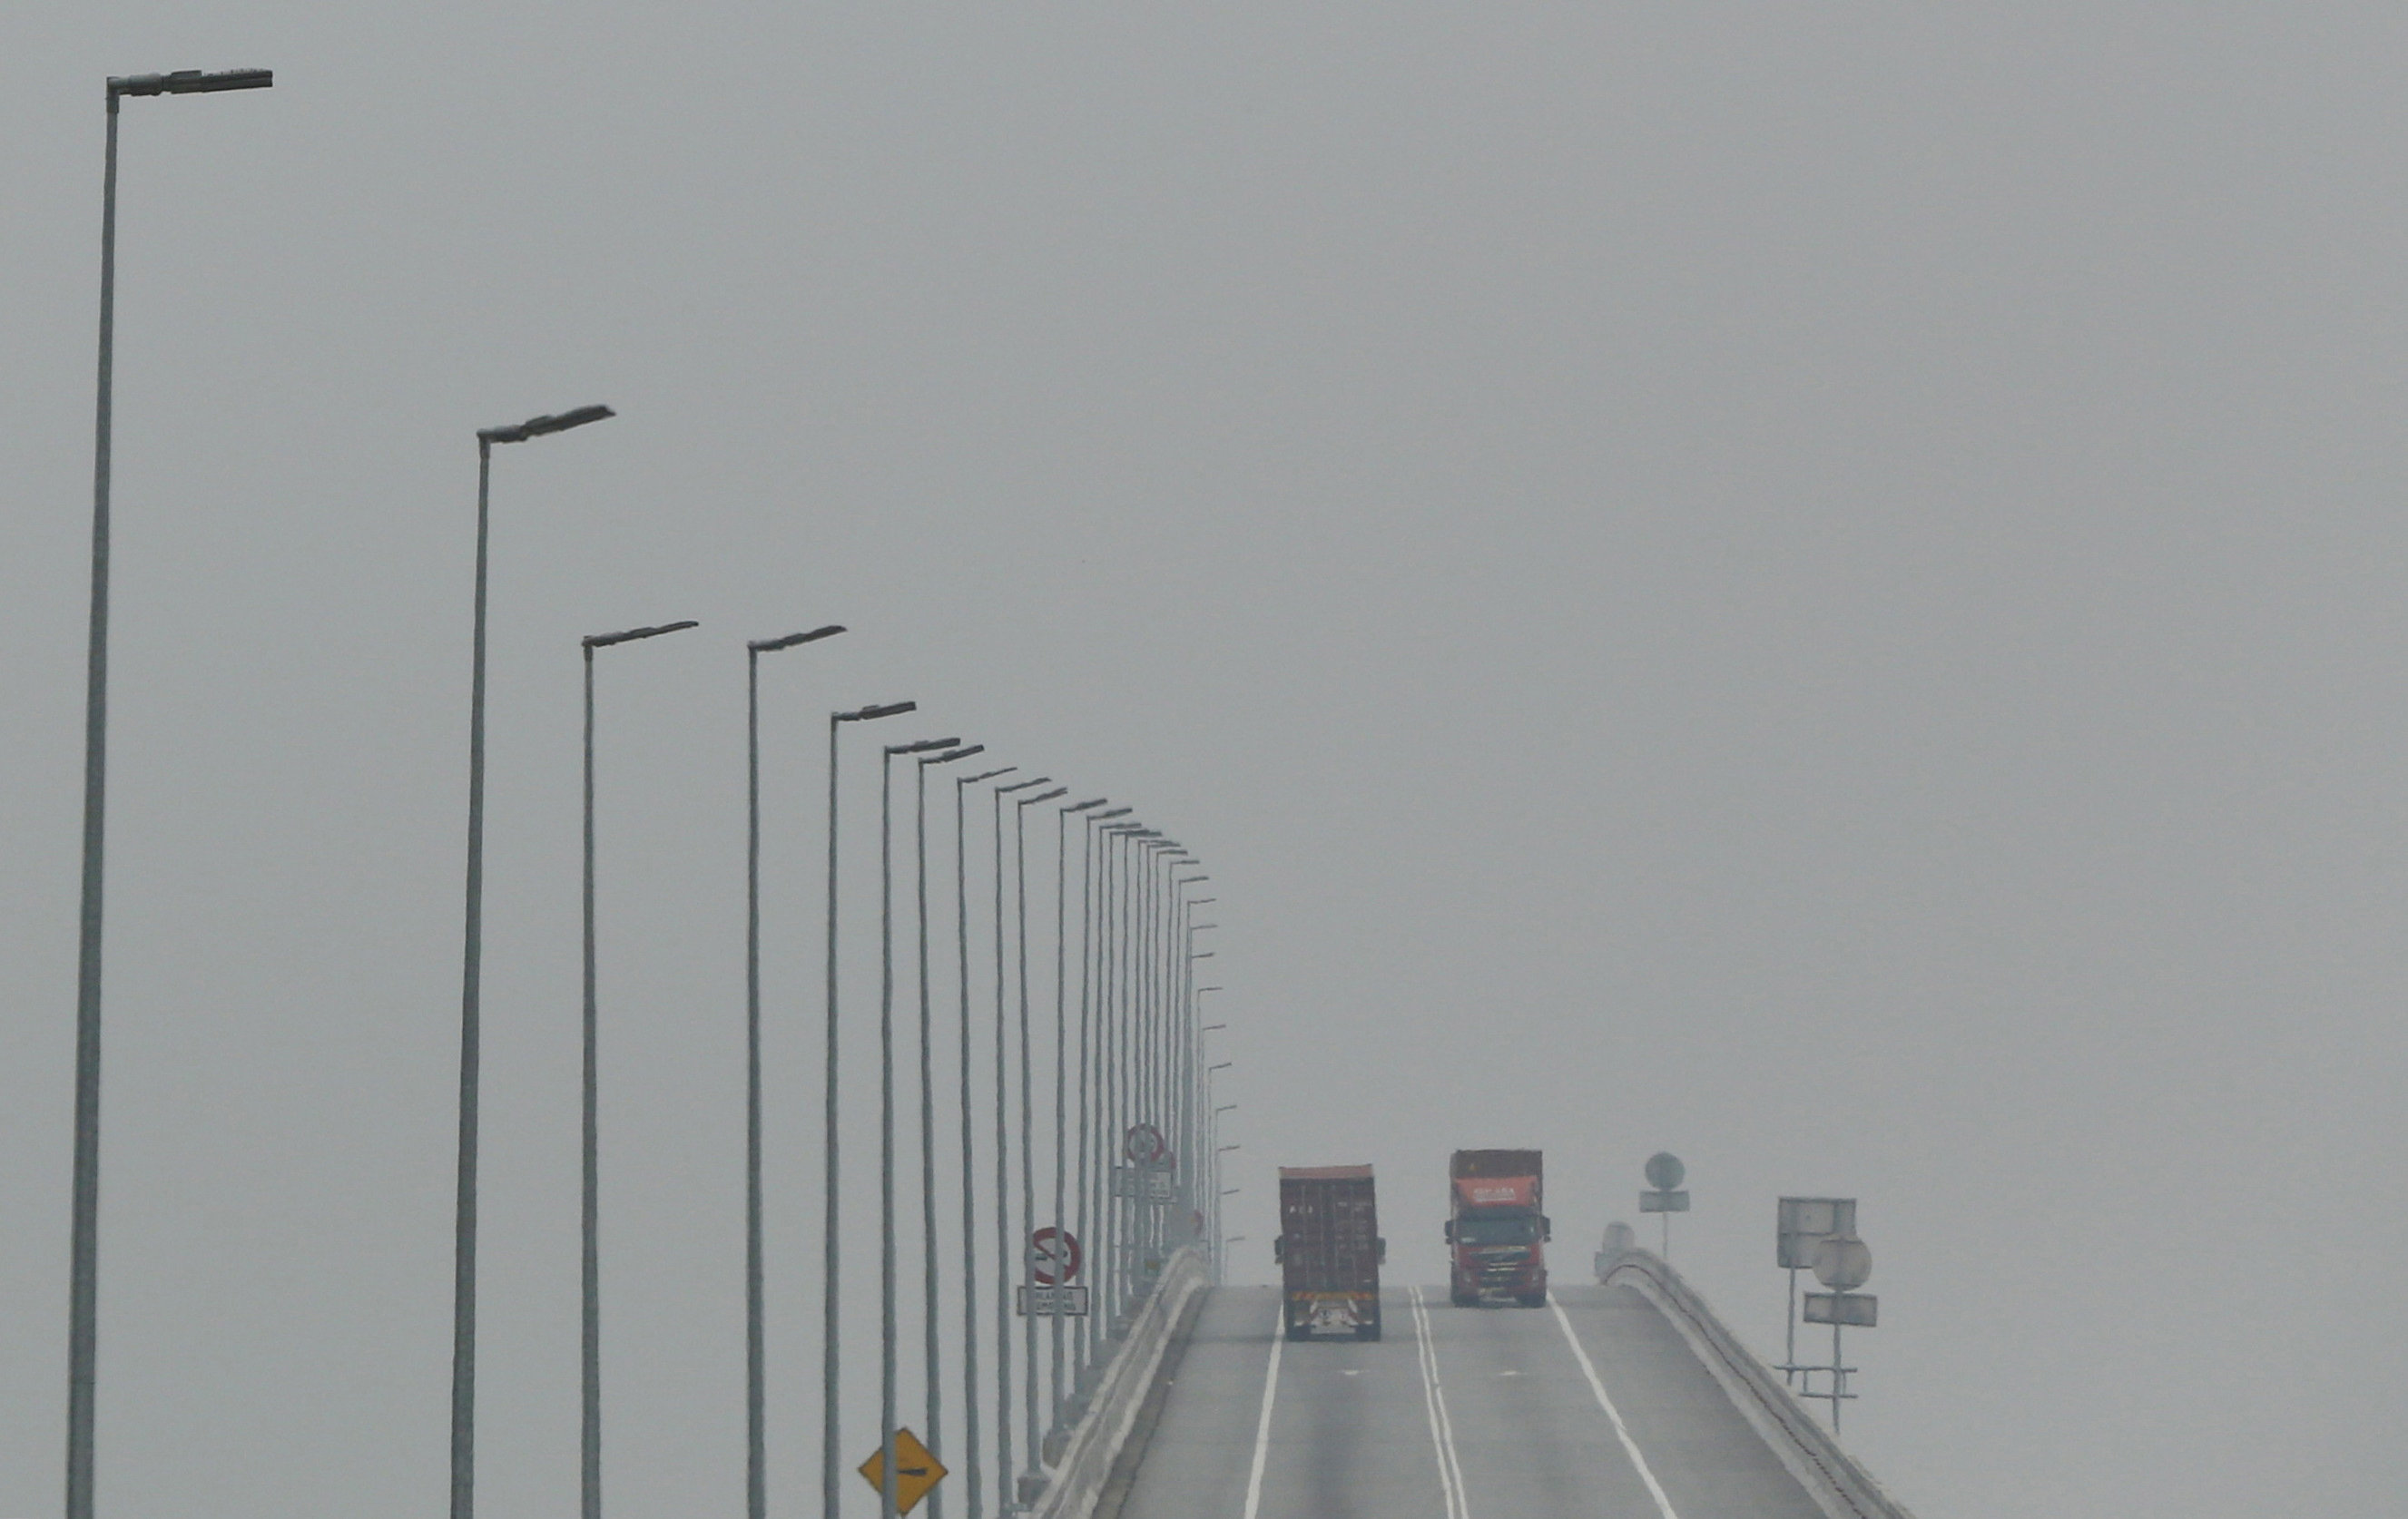 FILE PHOTO - Lorries cross a bridge shrouded in haze in Klang, Malaysia, October 7, 2015. REUTERS/Olivia Harris/File Photon